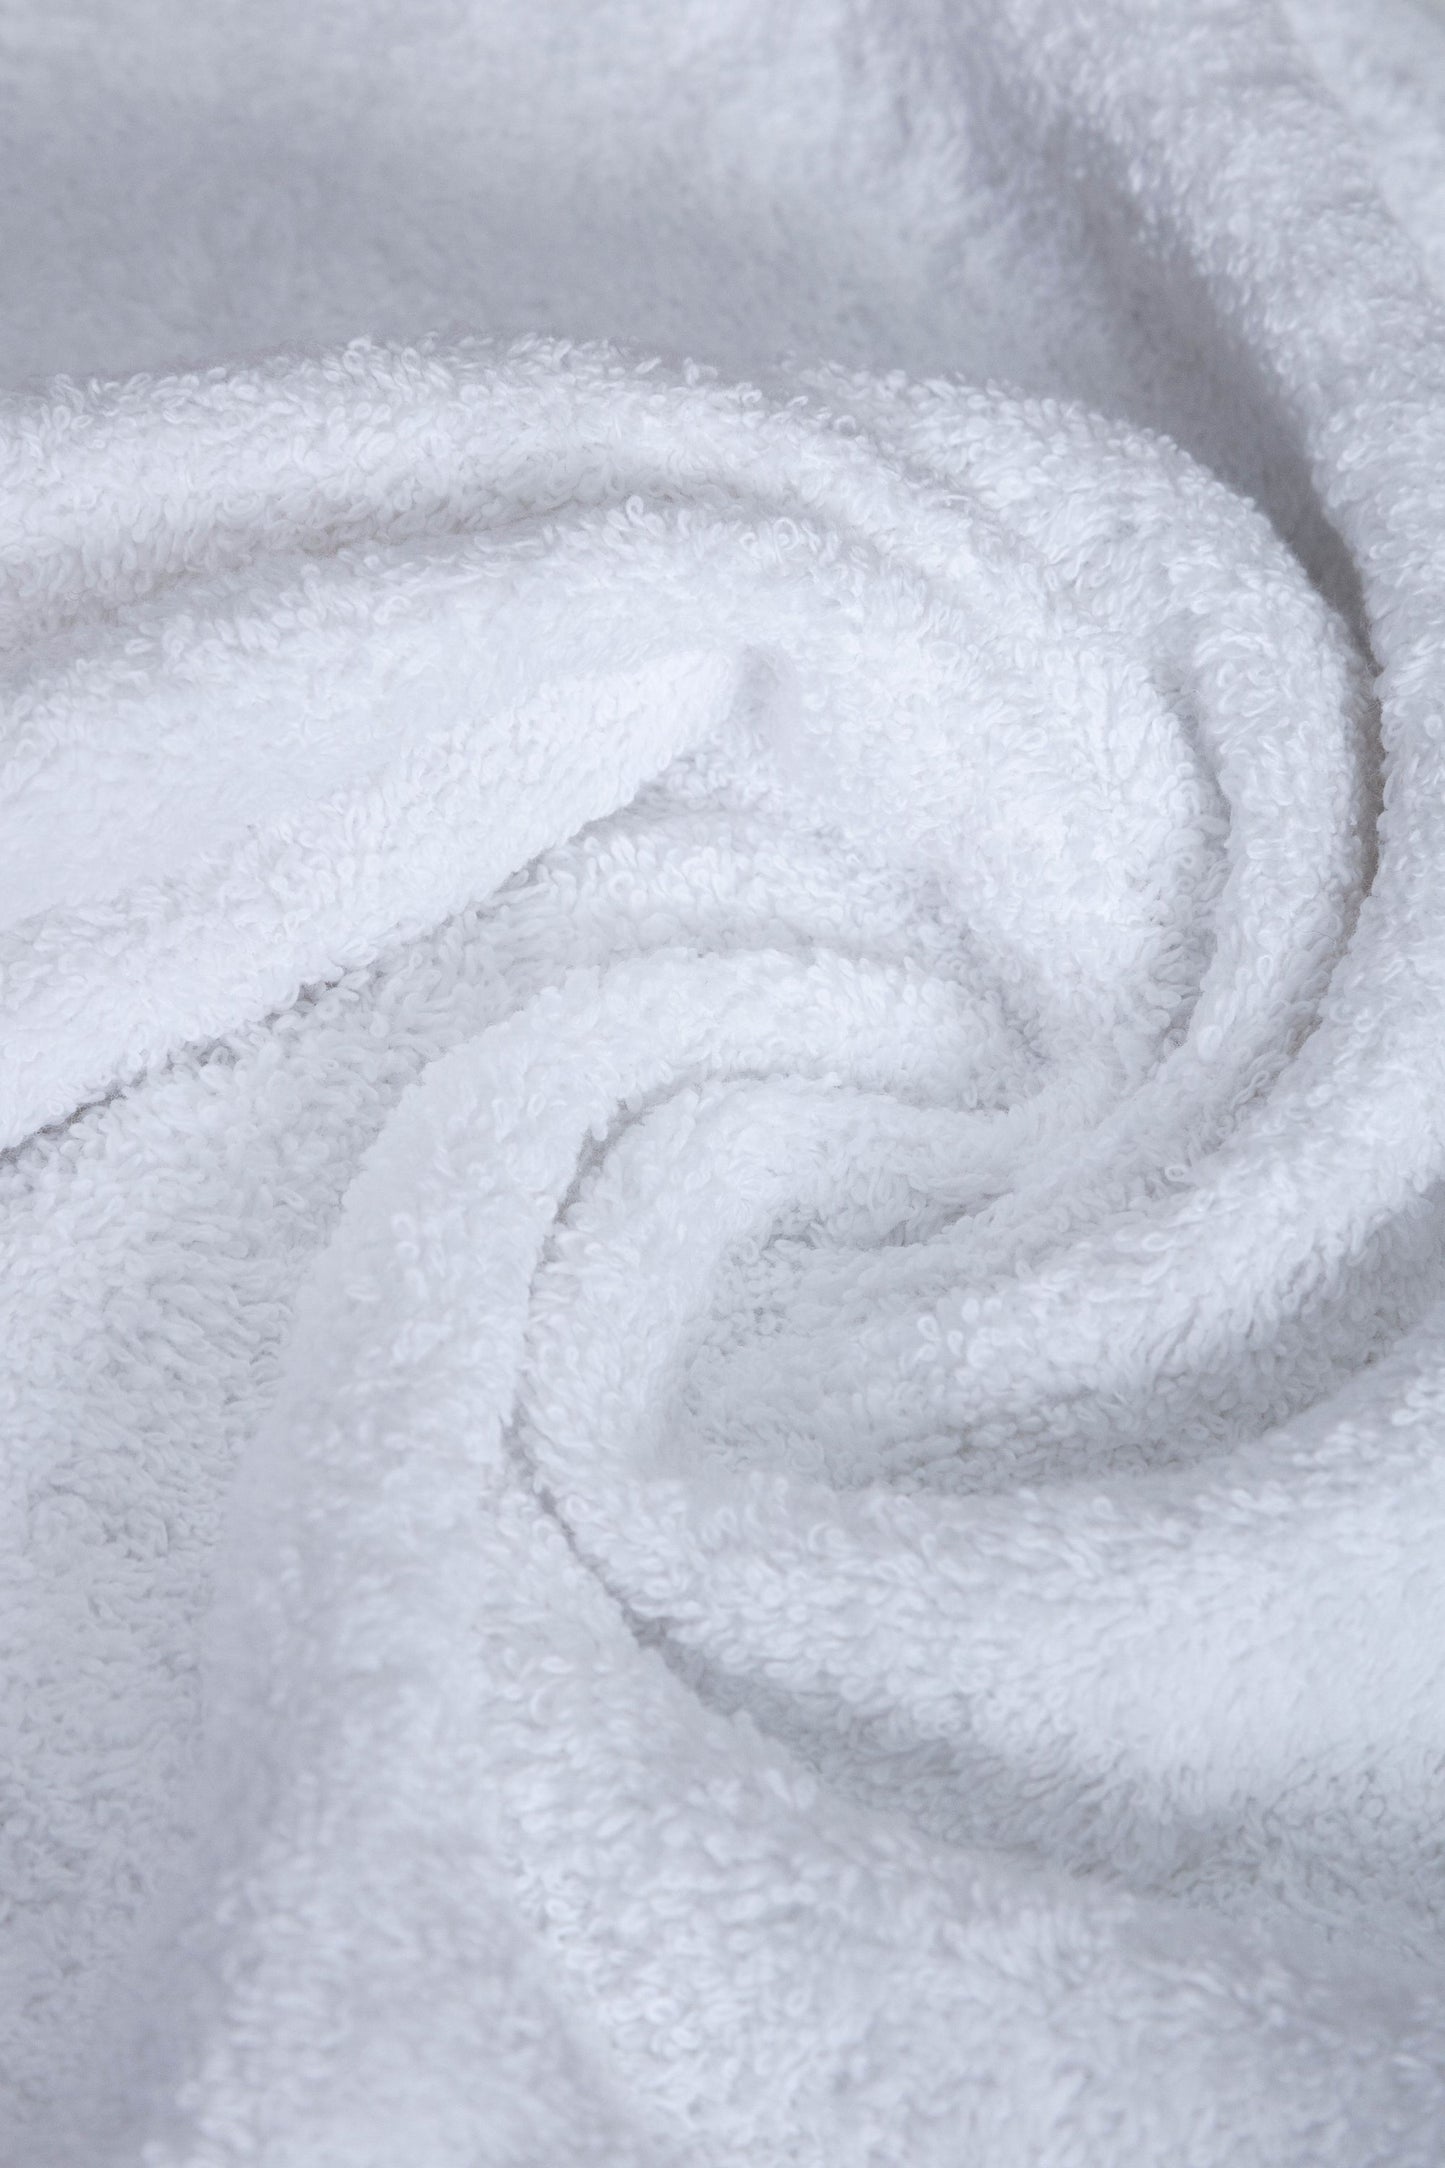 Turkish Cotton Washcloth Set of 12